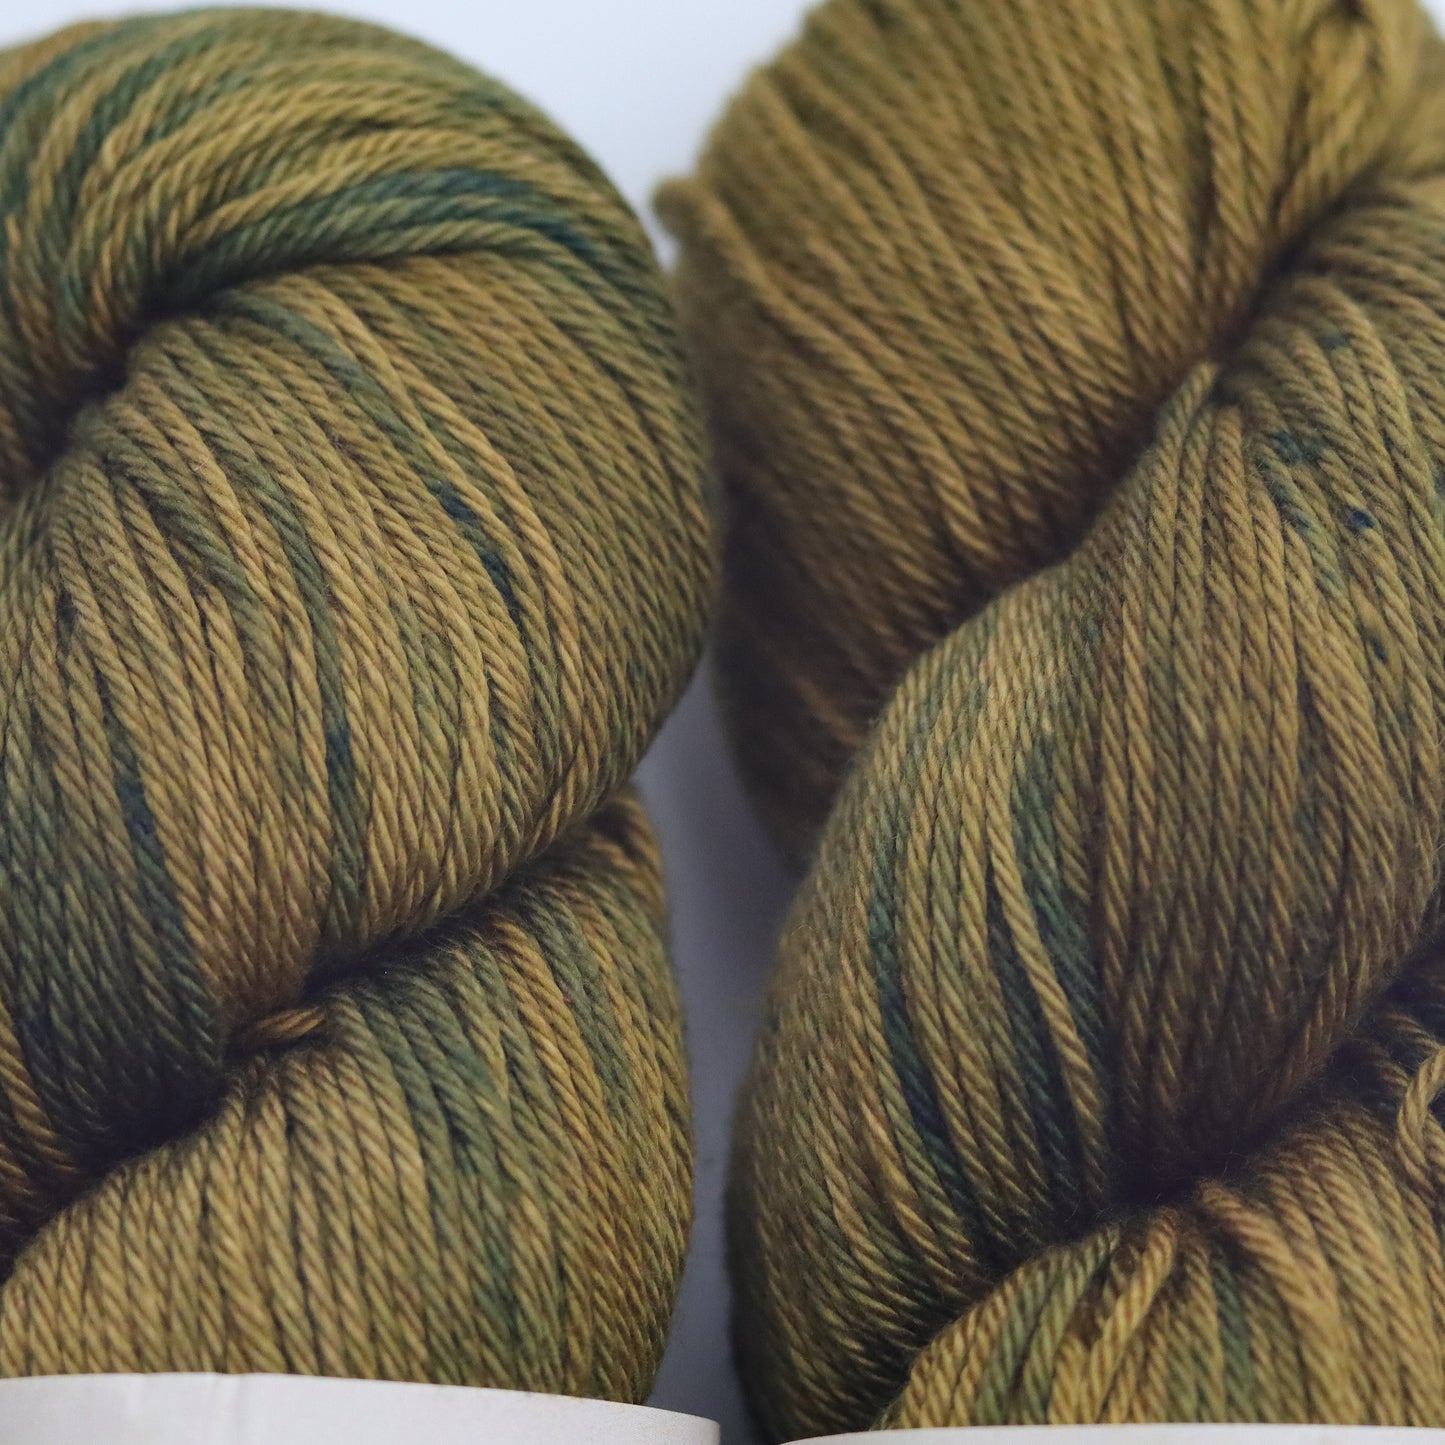 Peacock Yarn Light DK Cotton | Wild Olive | Hand Dyed 100% Cotton Yarn